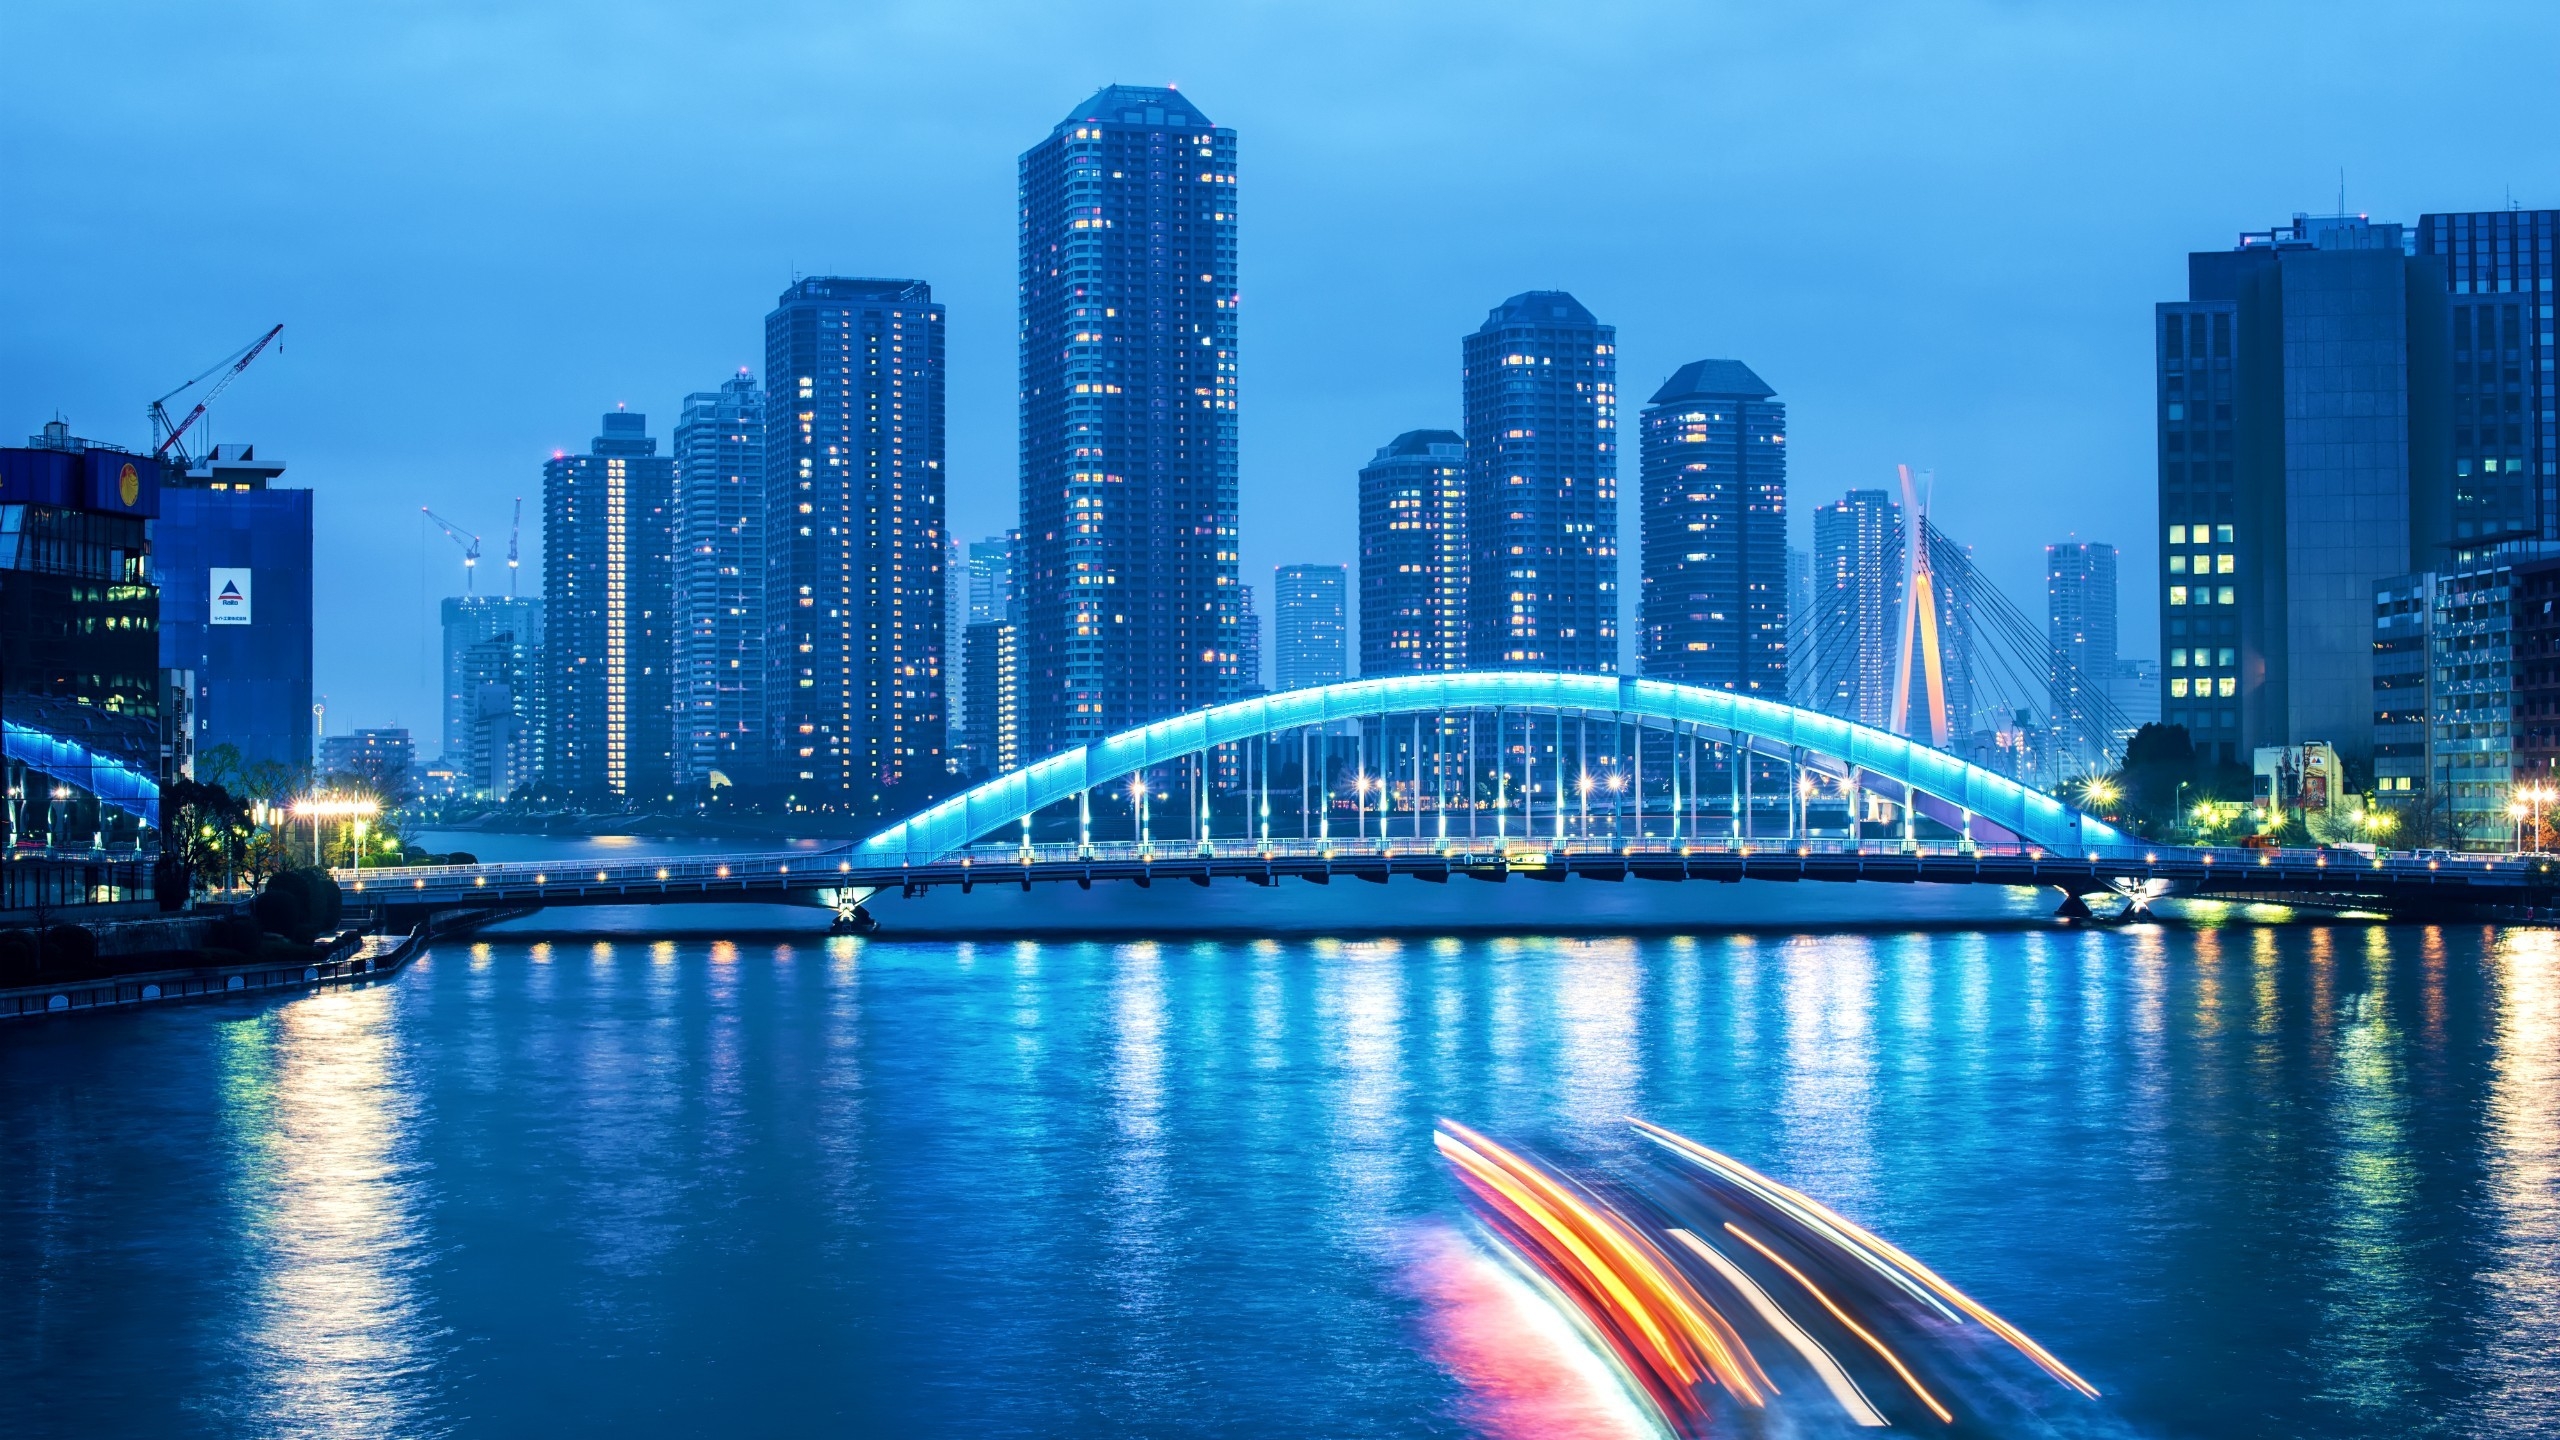 Tokyo Night Bridge Landscape for 2560x1440 HDTV resolution